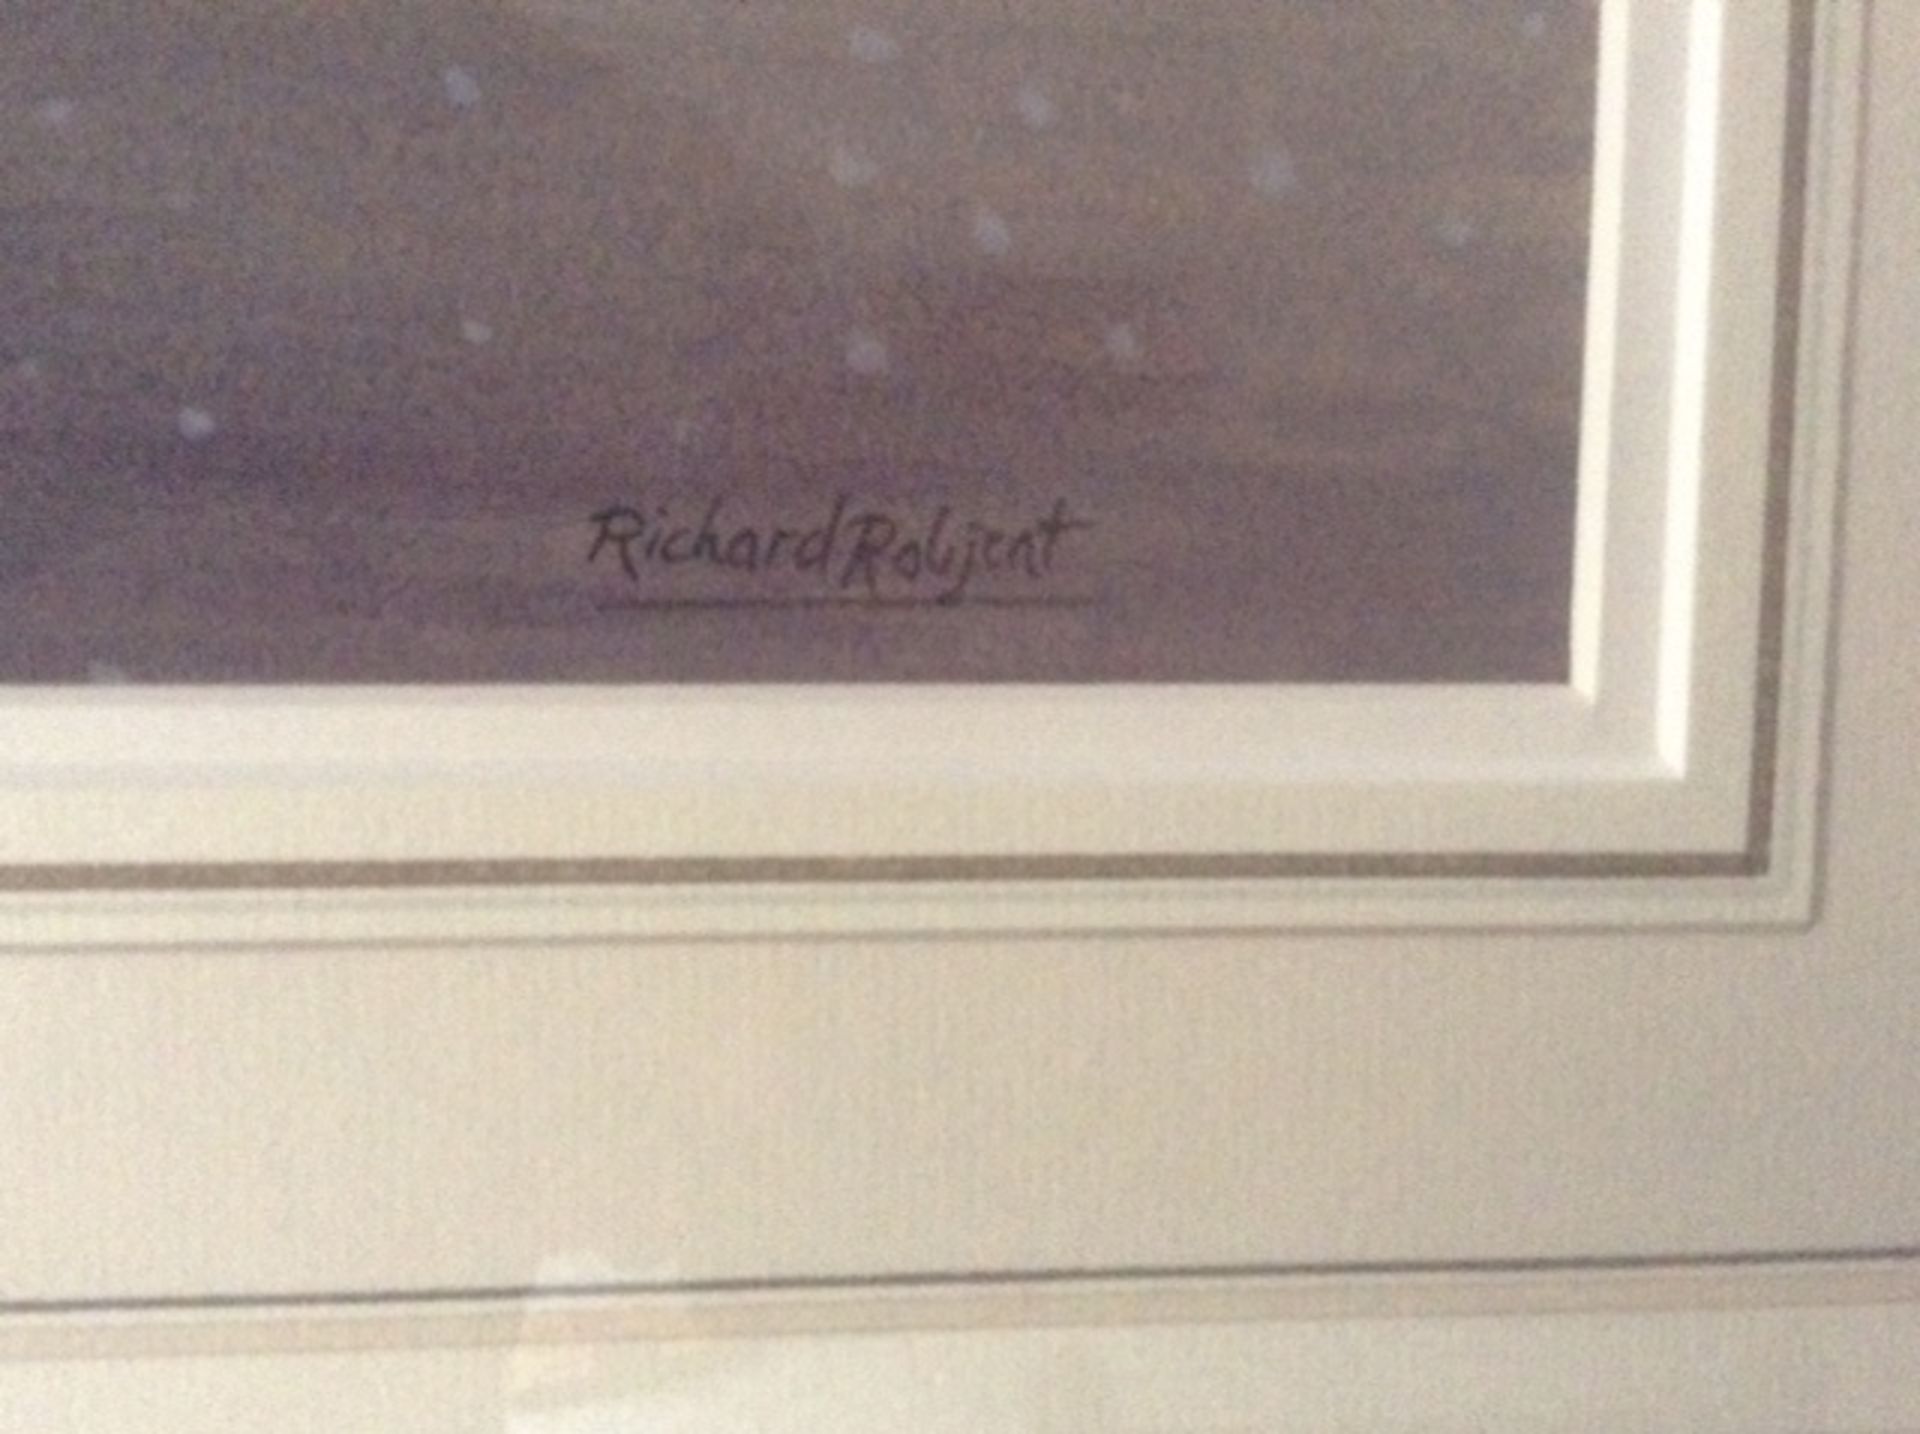 Richard robjent watercolour - Image 4 of 4